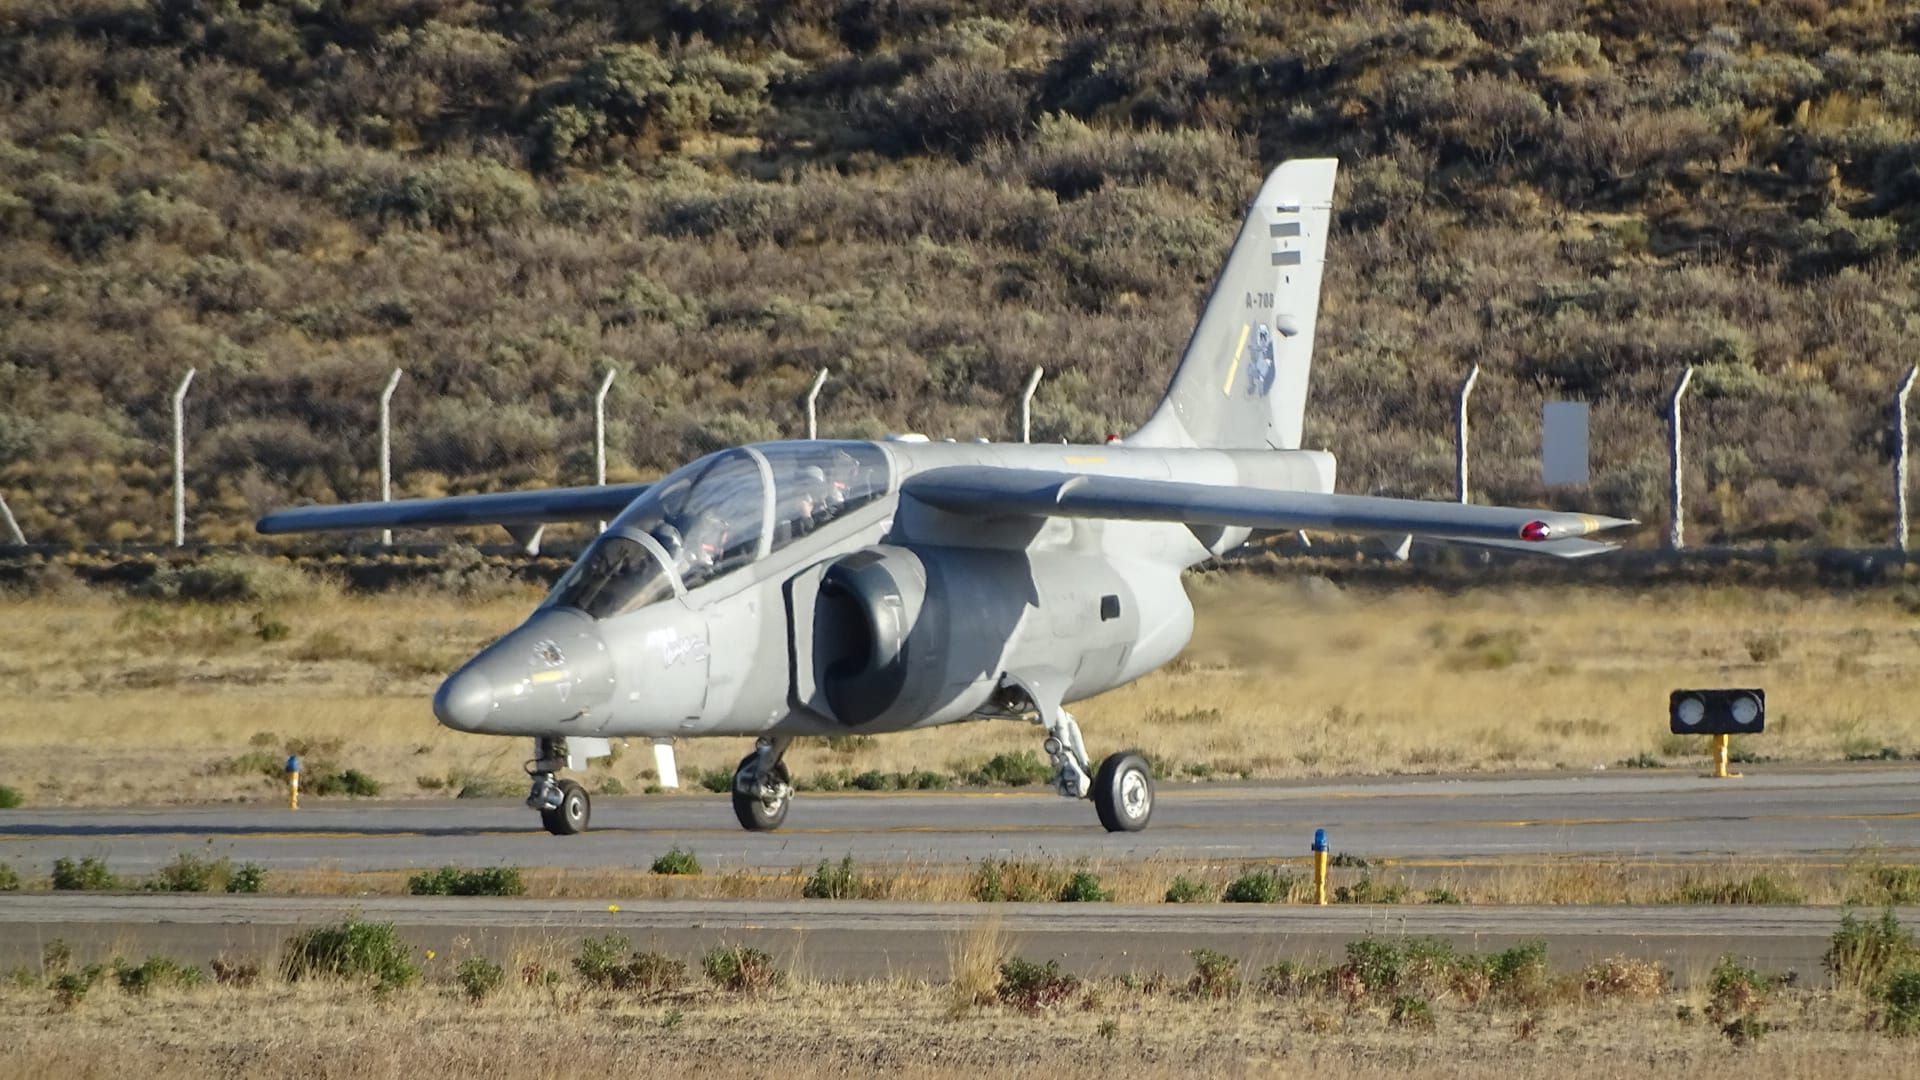 IA-63 Pampa III matricula A-708 perteneciente a la X Brigada_2023_Mayo_13.jpg